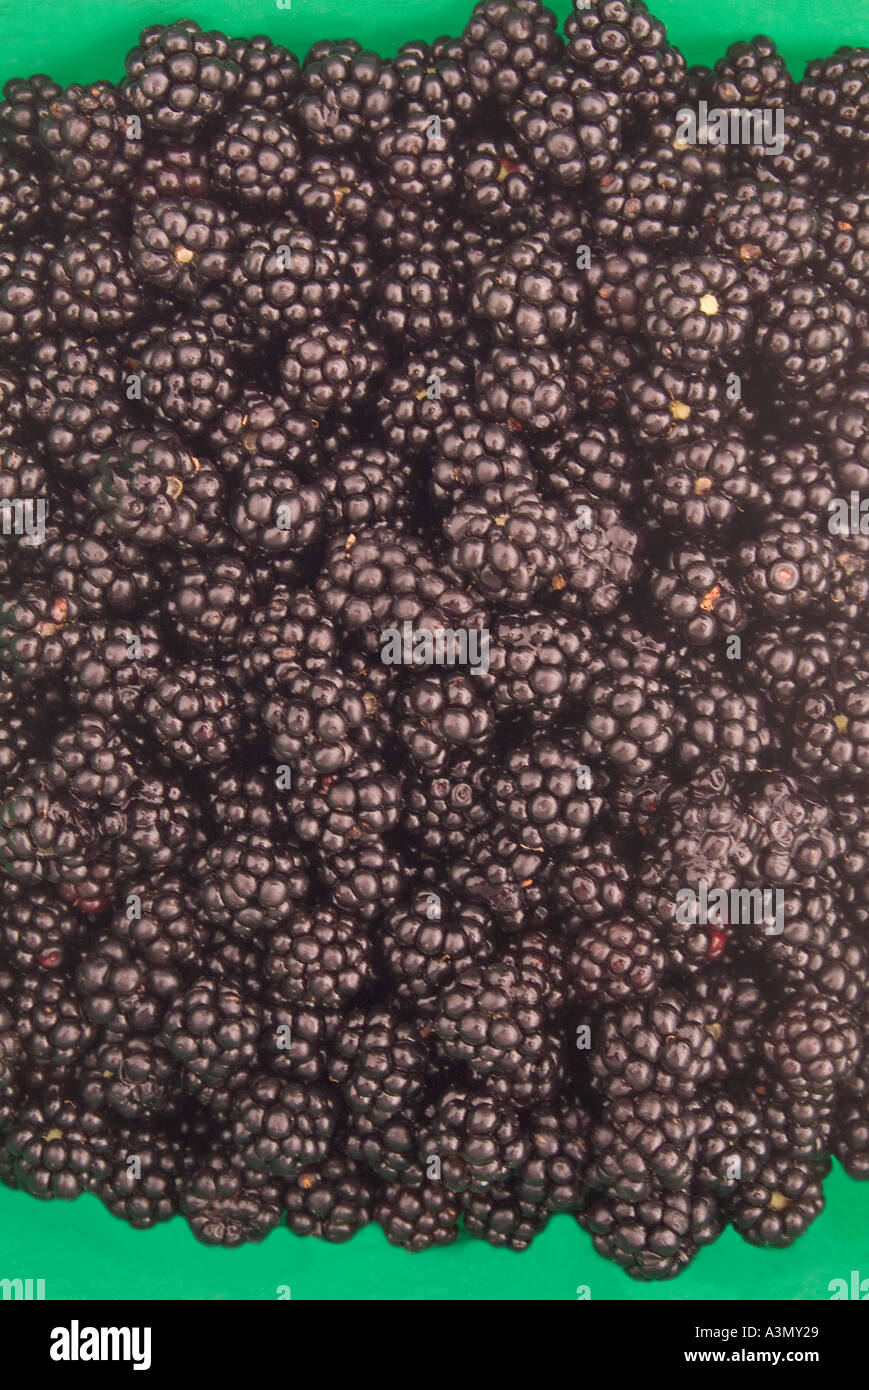 Ripened blackberries Stock Photo